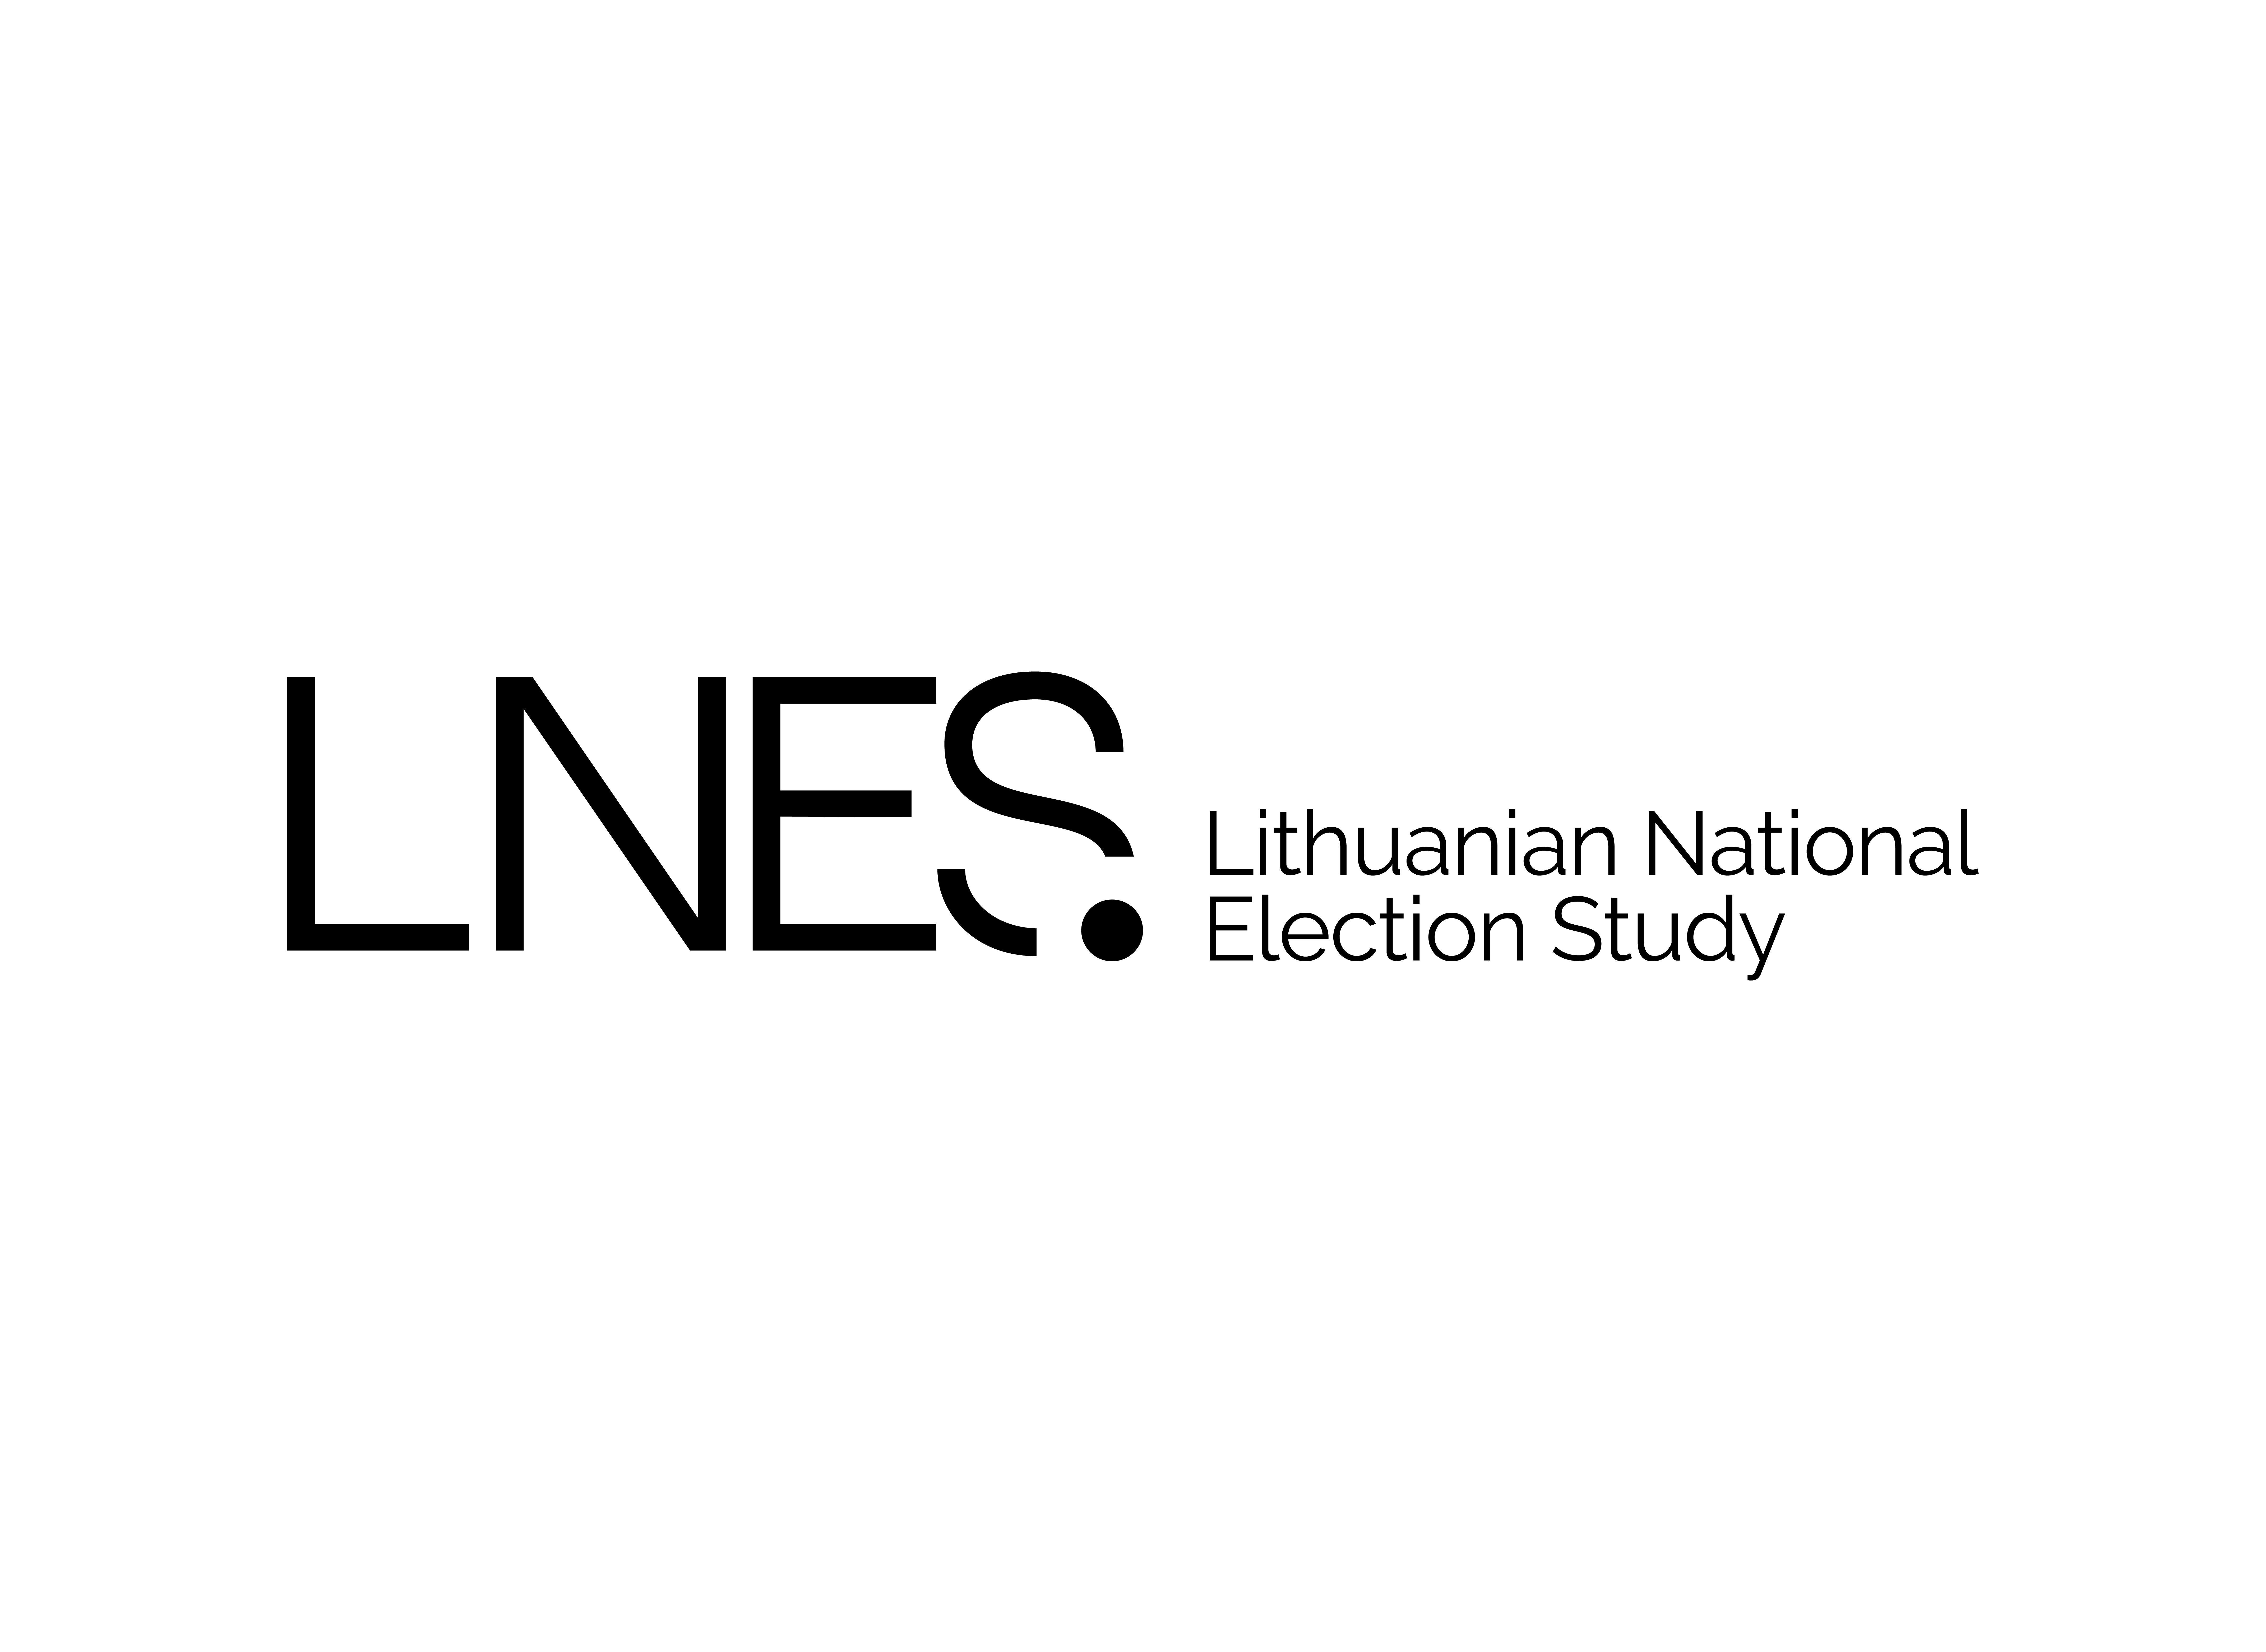 Lithuanian National Election Study = Lietuvos nacionalinė rinkiminė studija logo